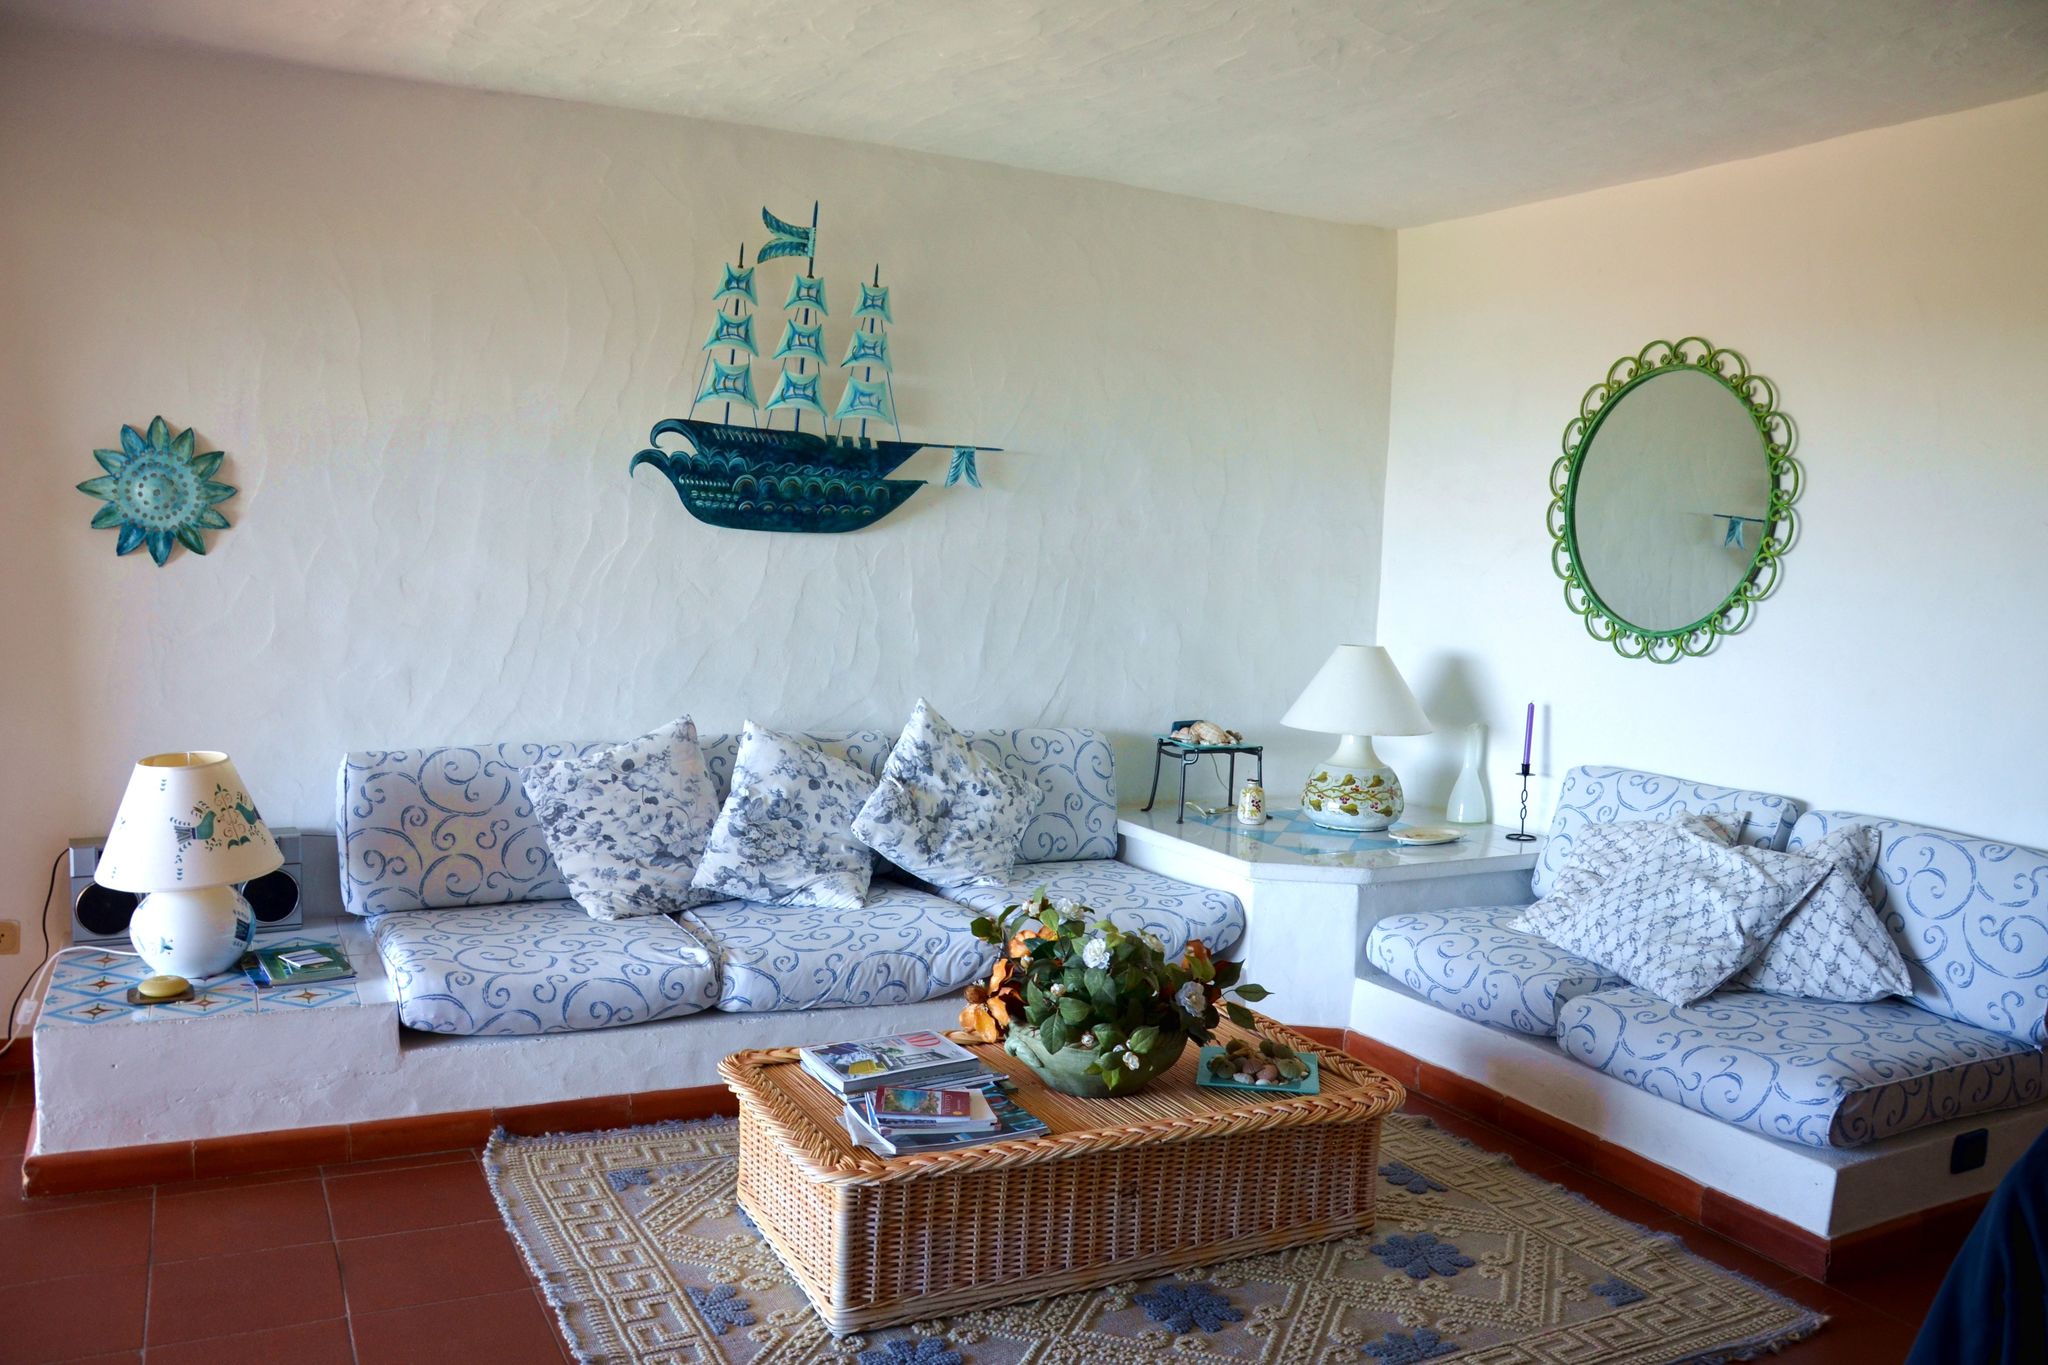 Villa avec piscine, surplombant les eaux cristallines de la Costa Smeralda